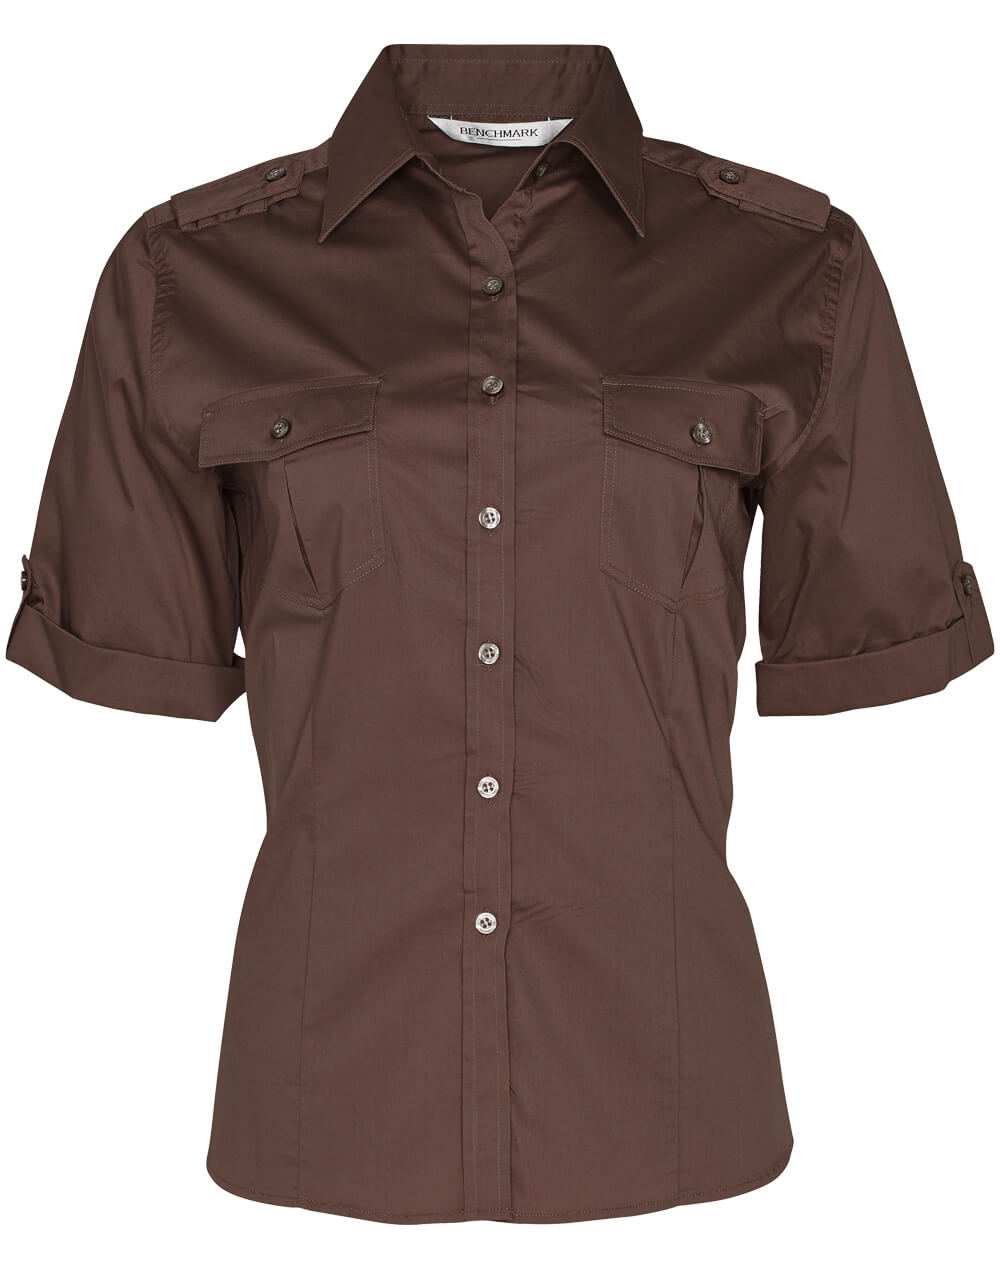 M8911 Women's Short Sleeve Military Shirt